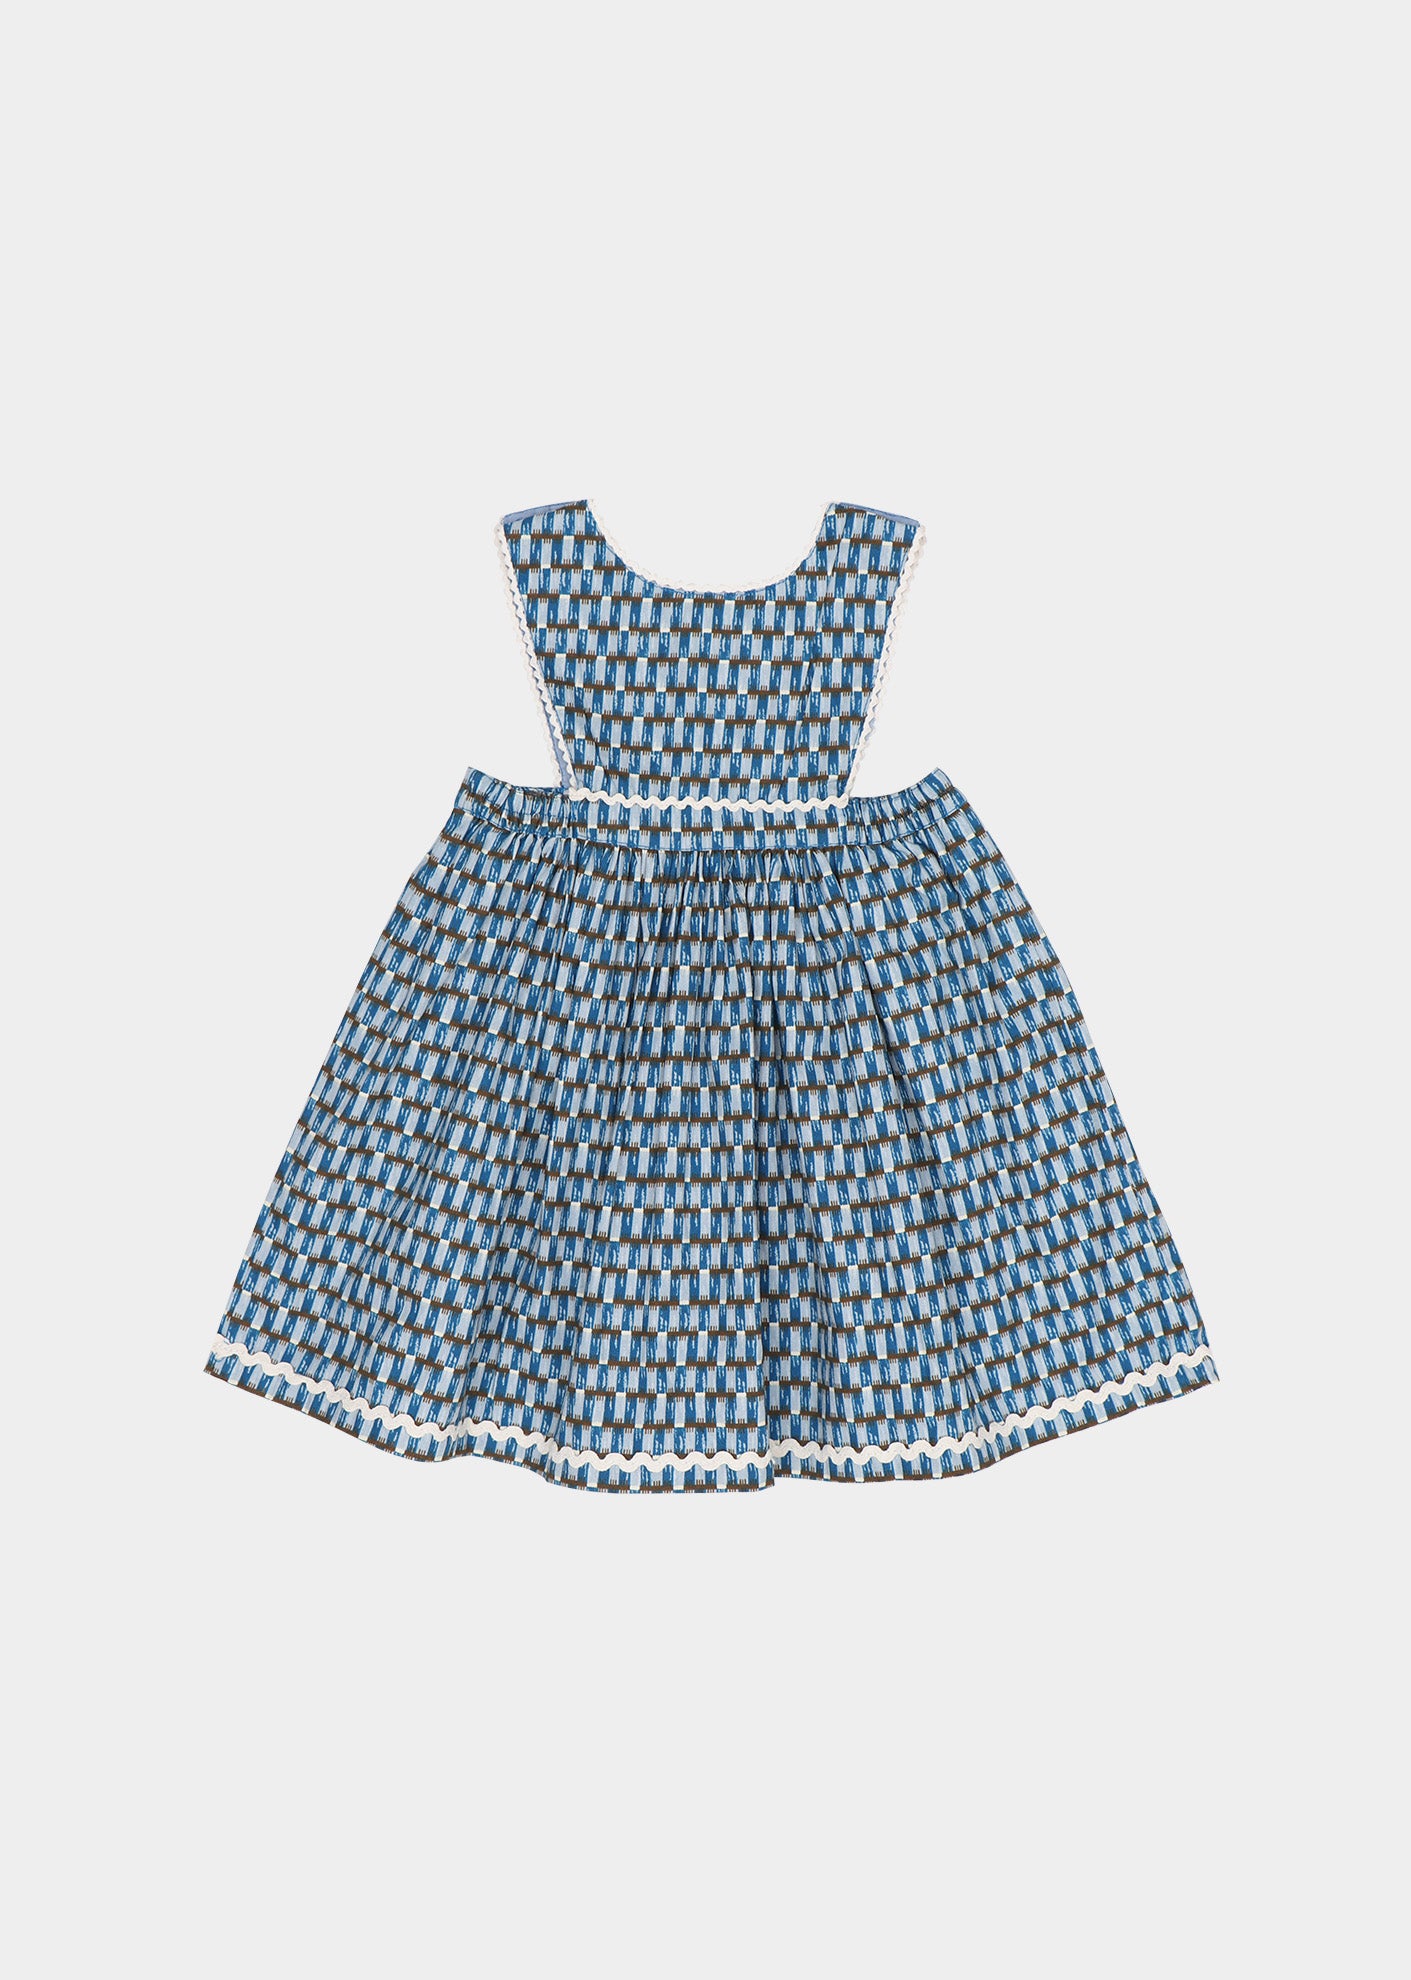 JUPITER BABY DRESS - BLUE GEO PRINT